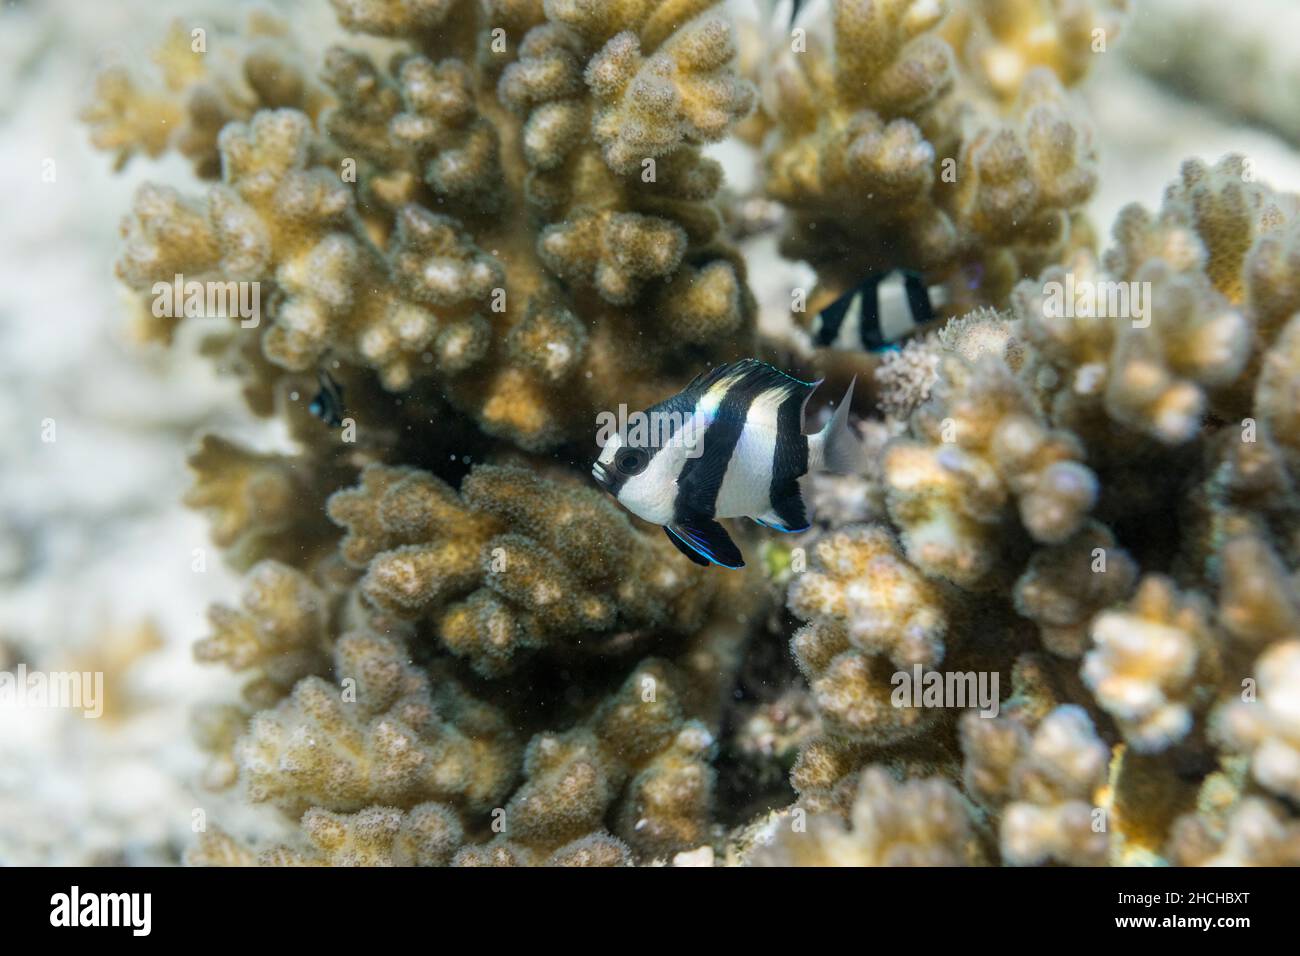 Humbug Fish; Dascyllus aruanus; Maldives Stock Photo